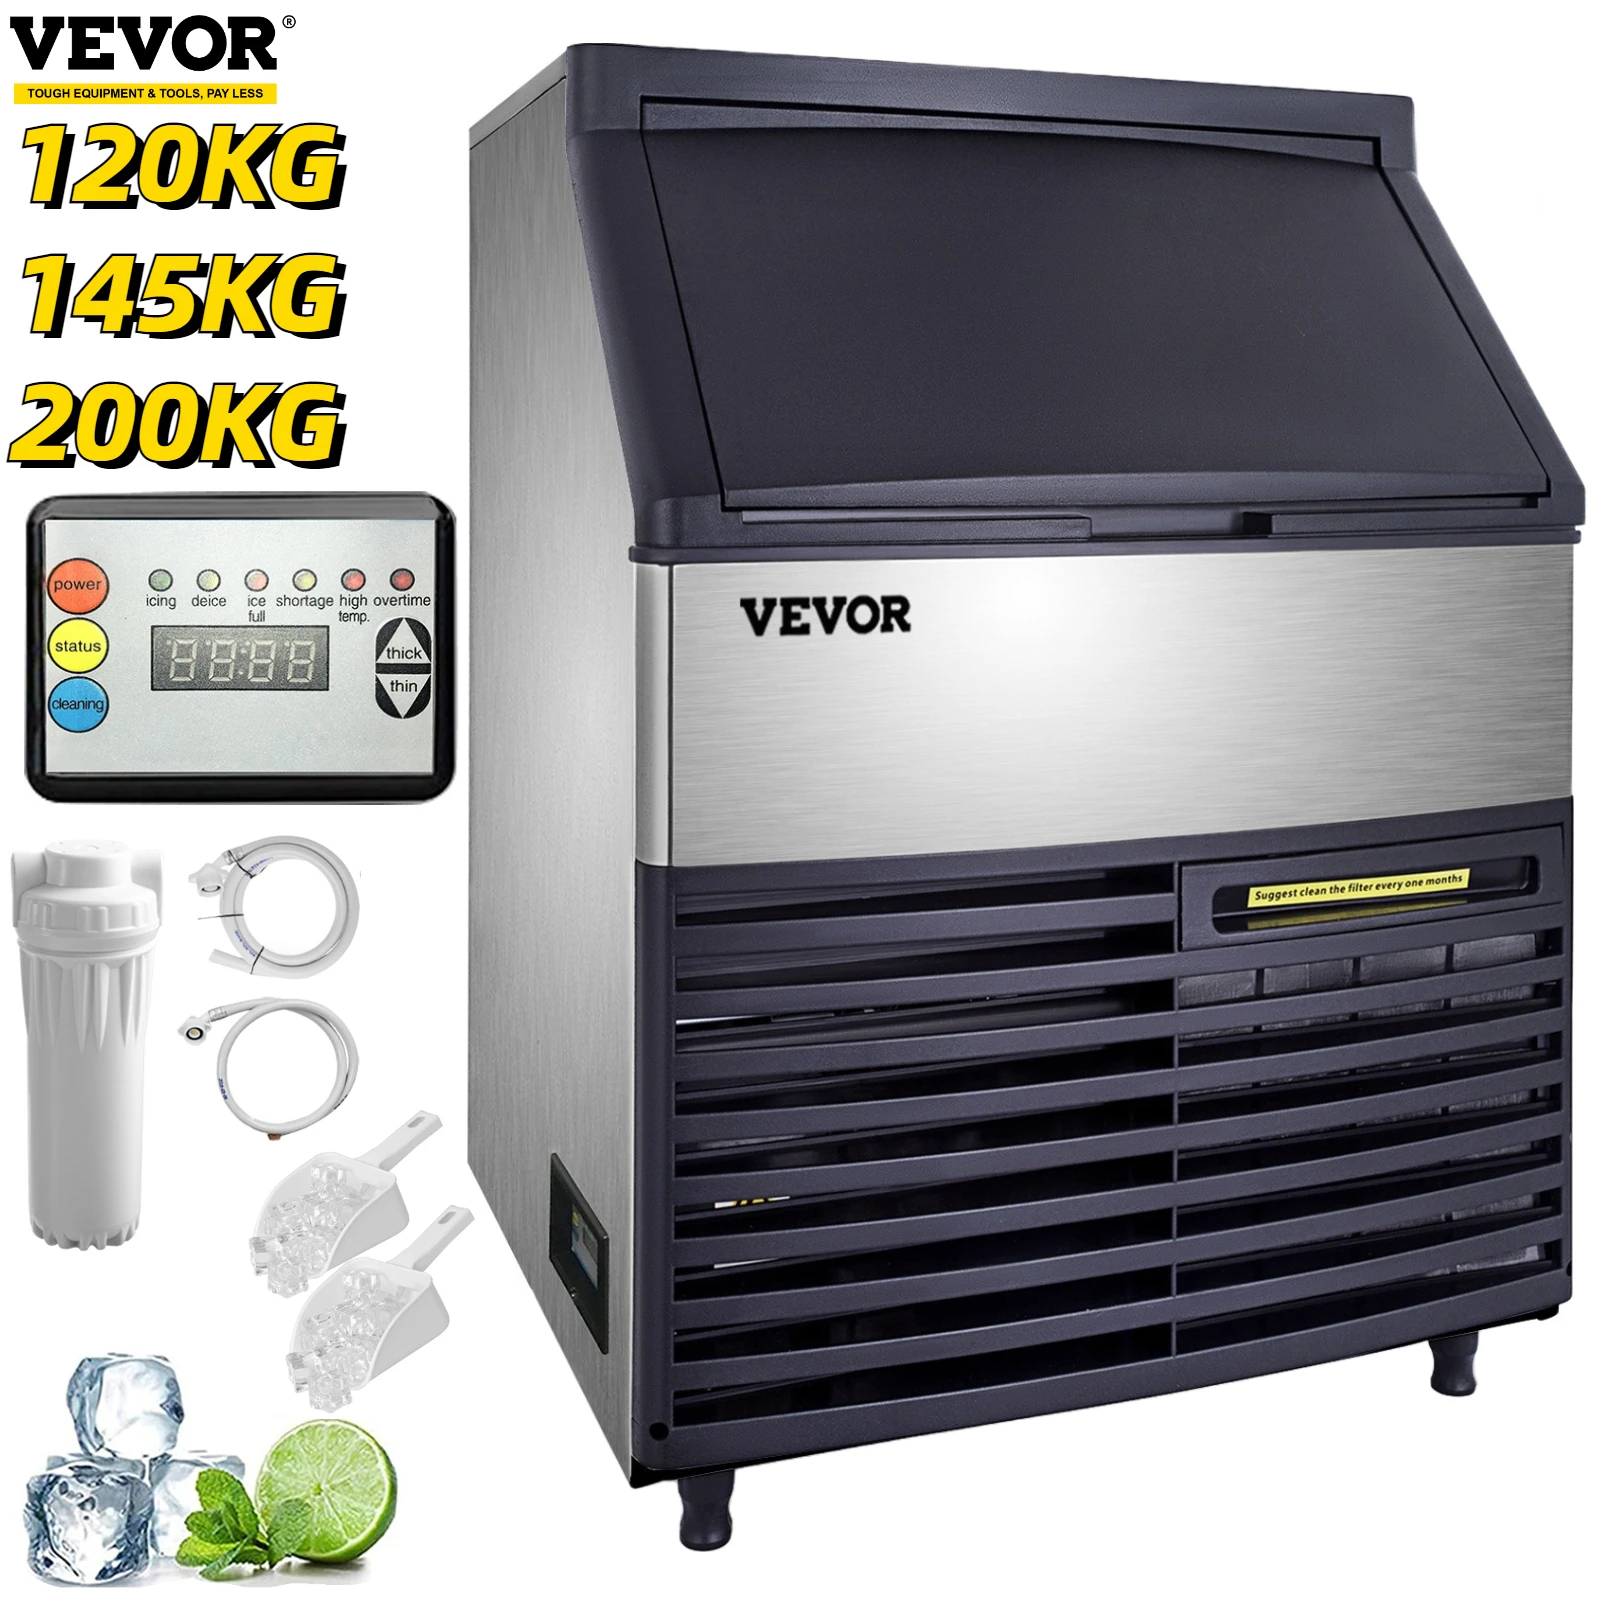 

VEVOR Commercial Cube Ice Maker 120/145/200 KG/24H Freestanding Auto Clean Liquid Freezer Ice Generator Machine Home Appliance